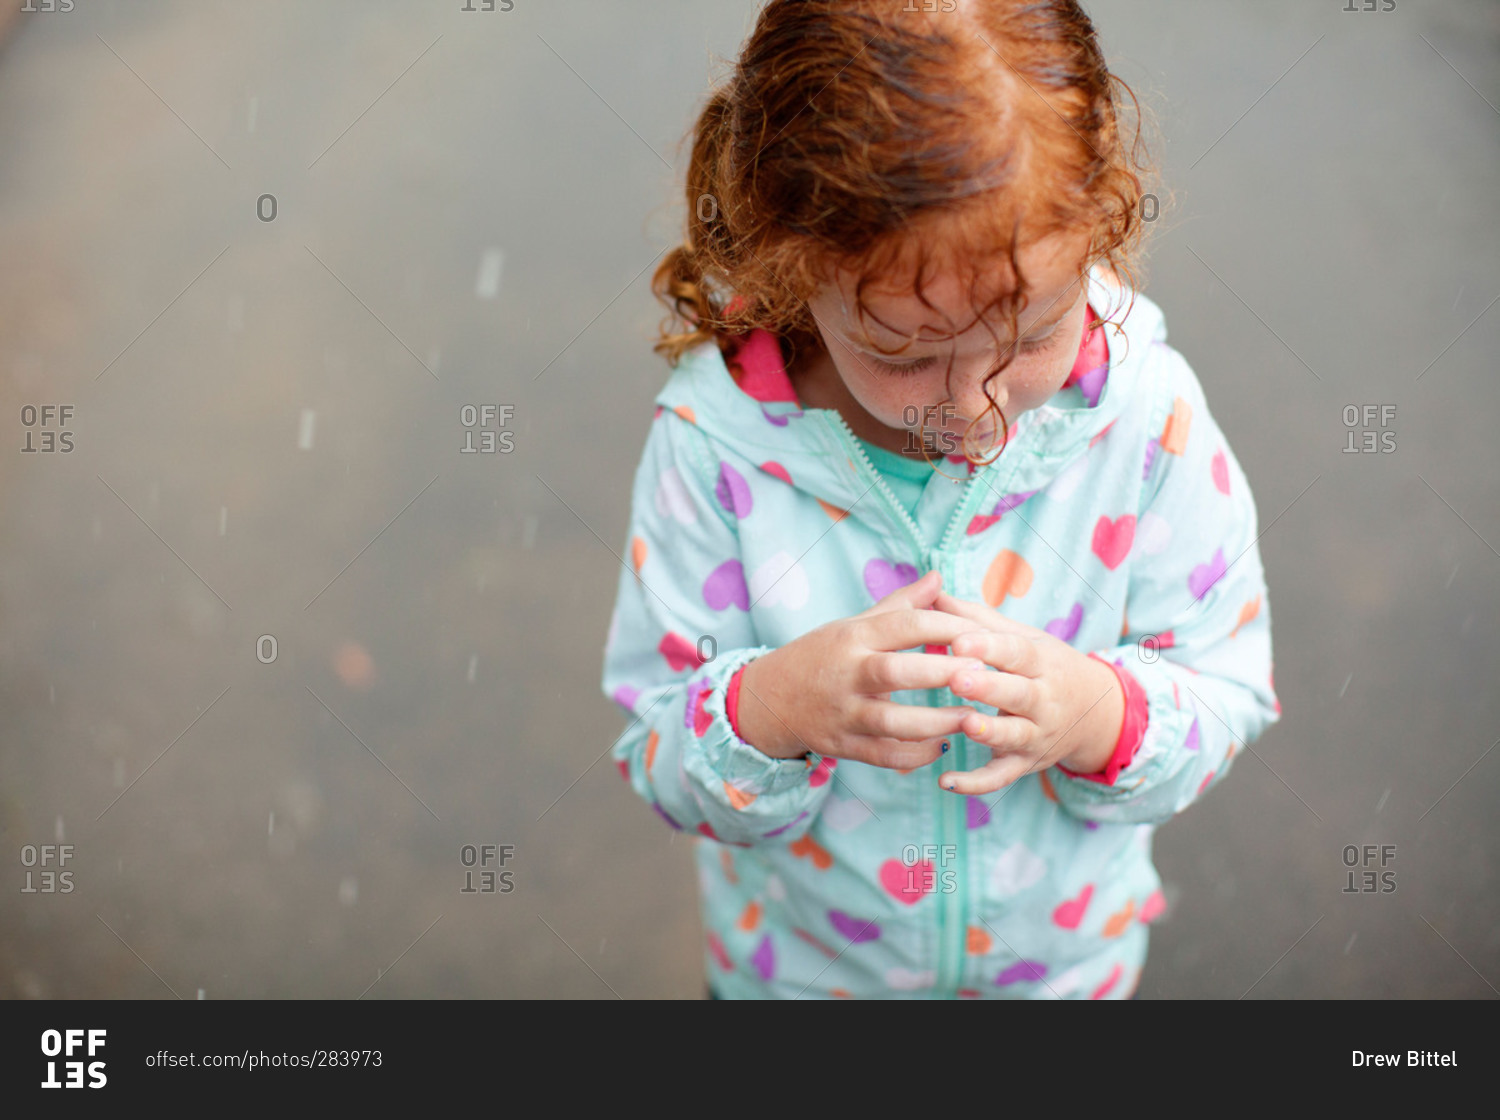 Girl in raincoat standing in rain drops